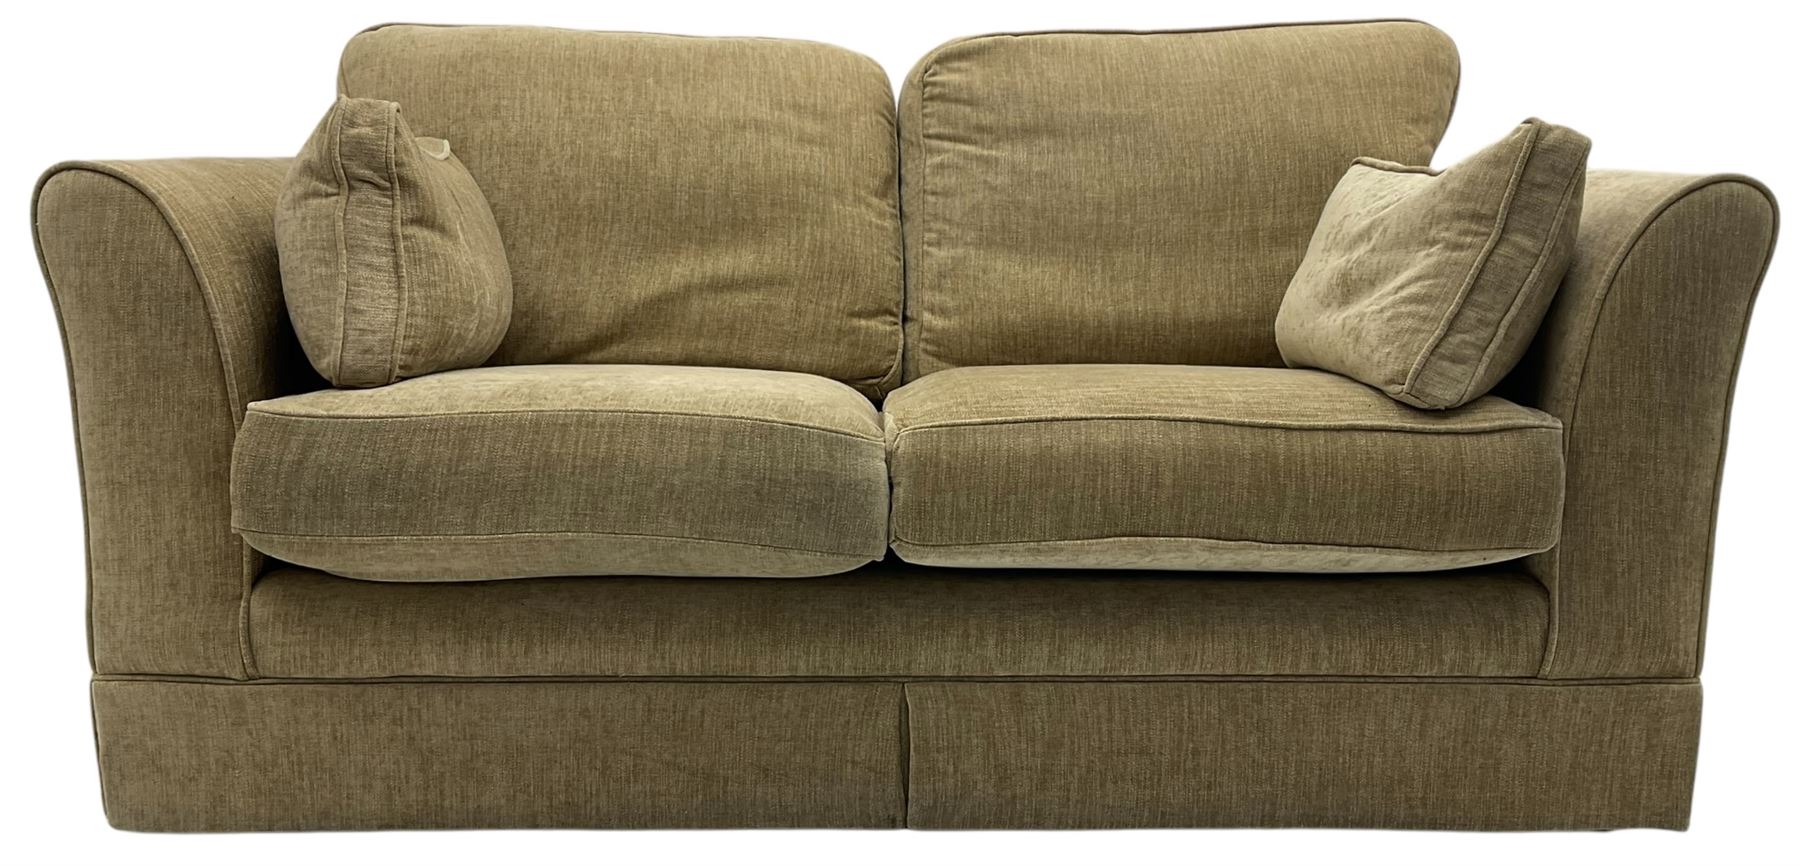 Three seat sofa (W200cm - Image 6 of 9